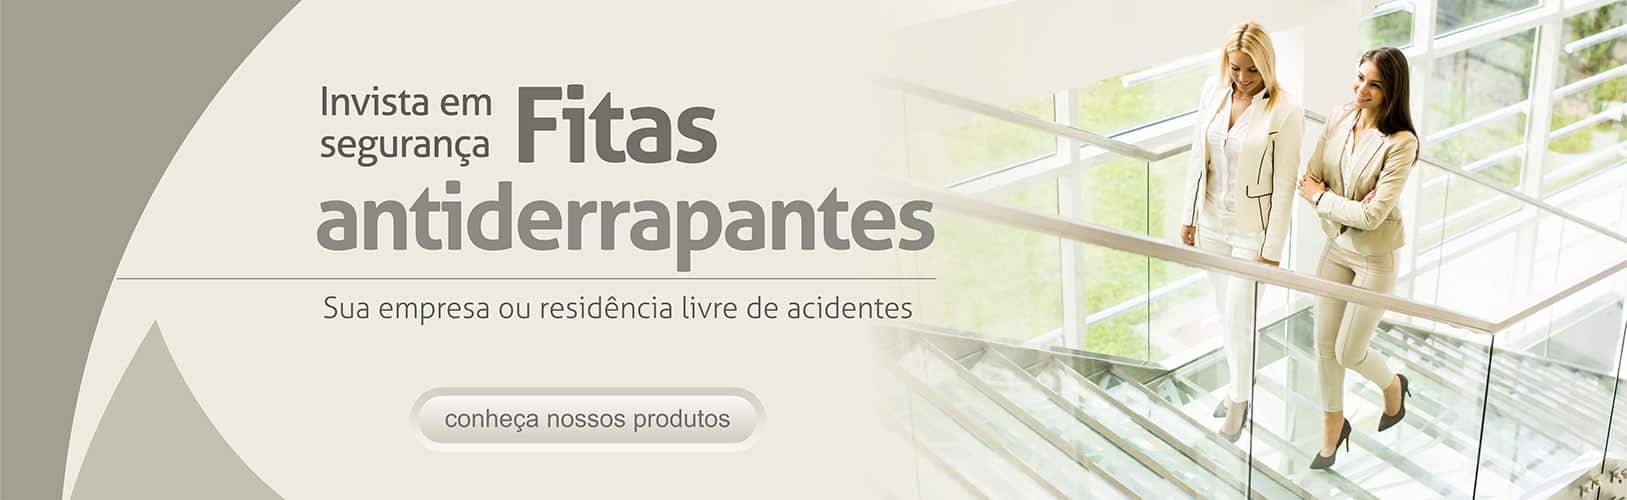 invista-em-seguranca-fitas-antiderrapantes-1 Tapetes Personalizados CooperKap